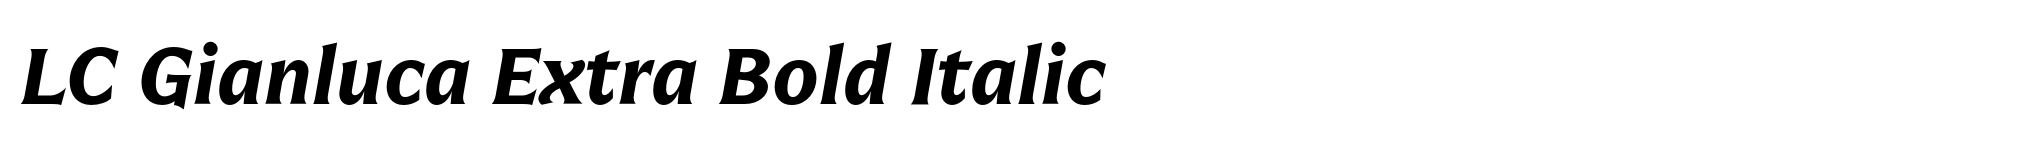 LC Gianluca Extra Bold Italic image